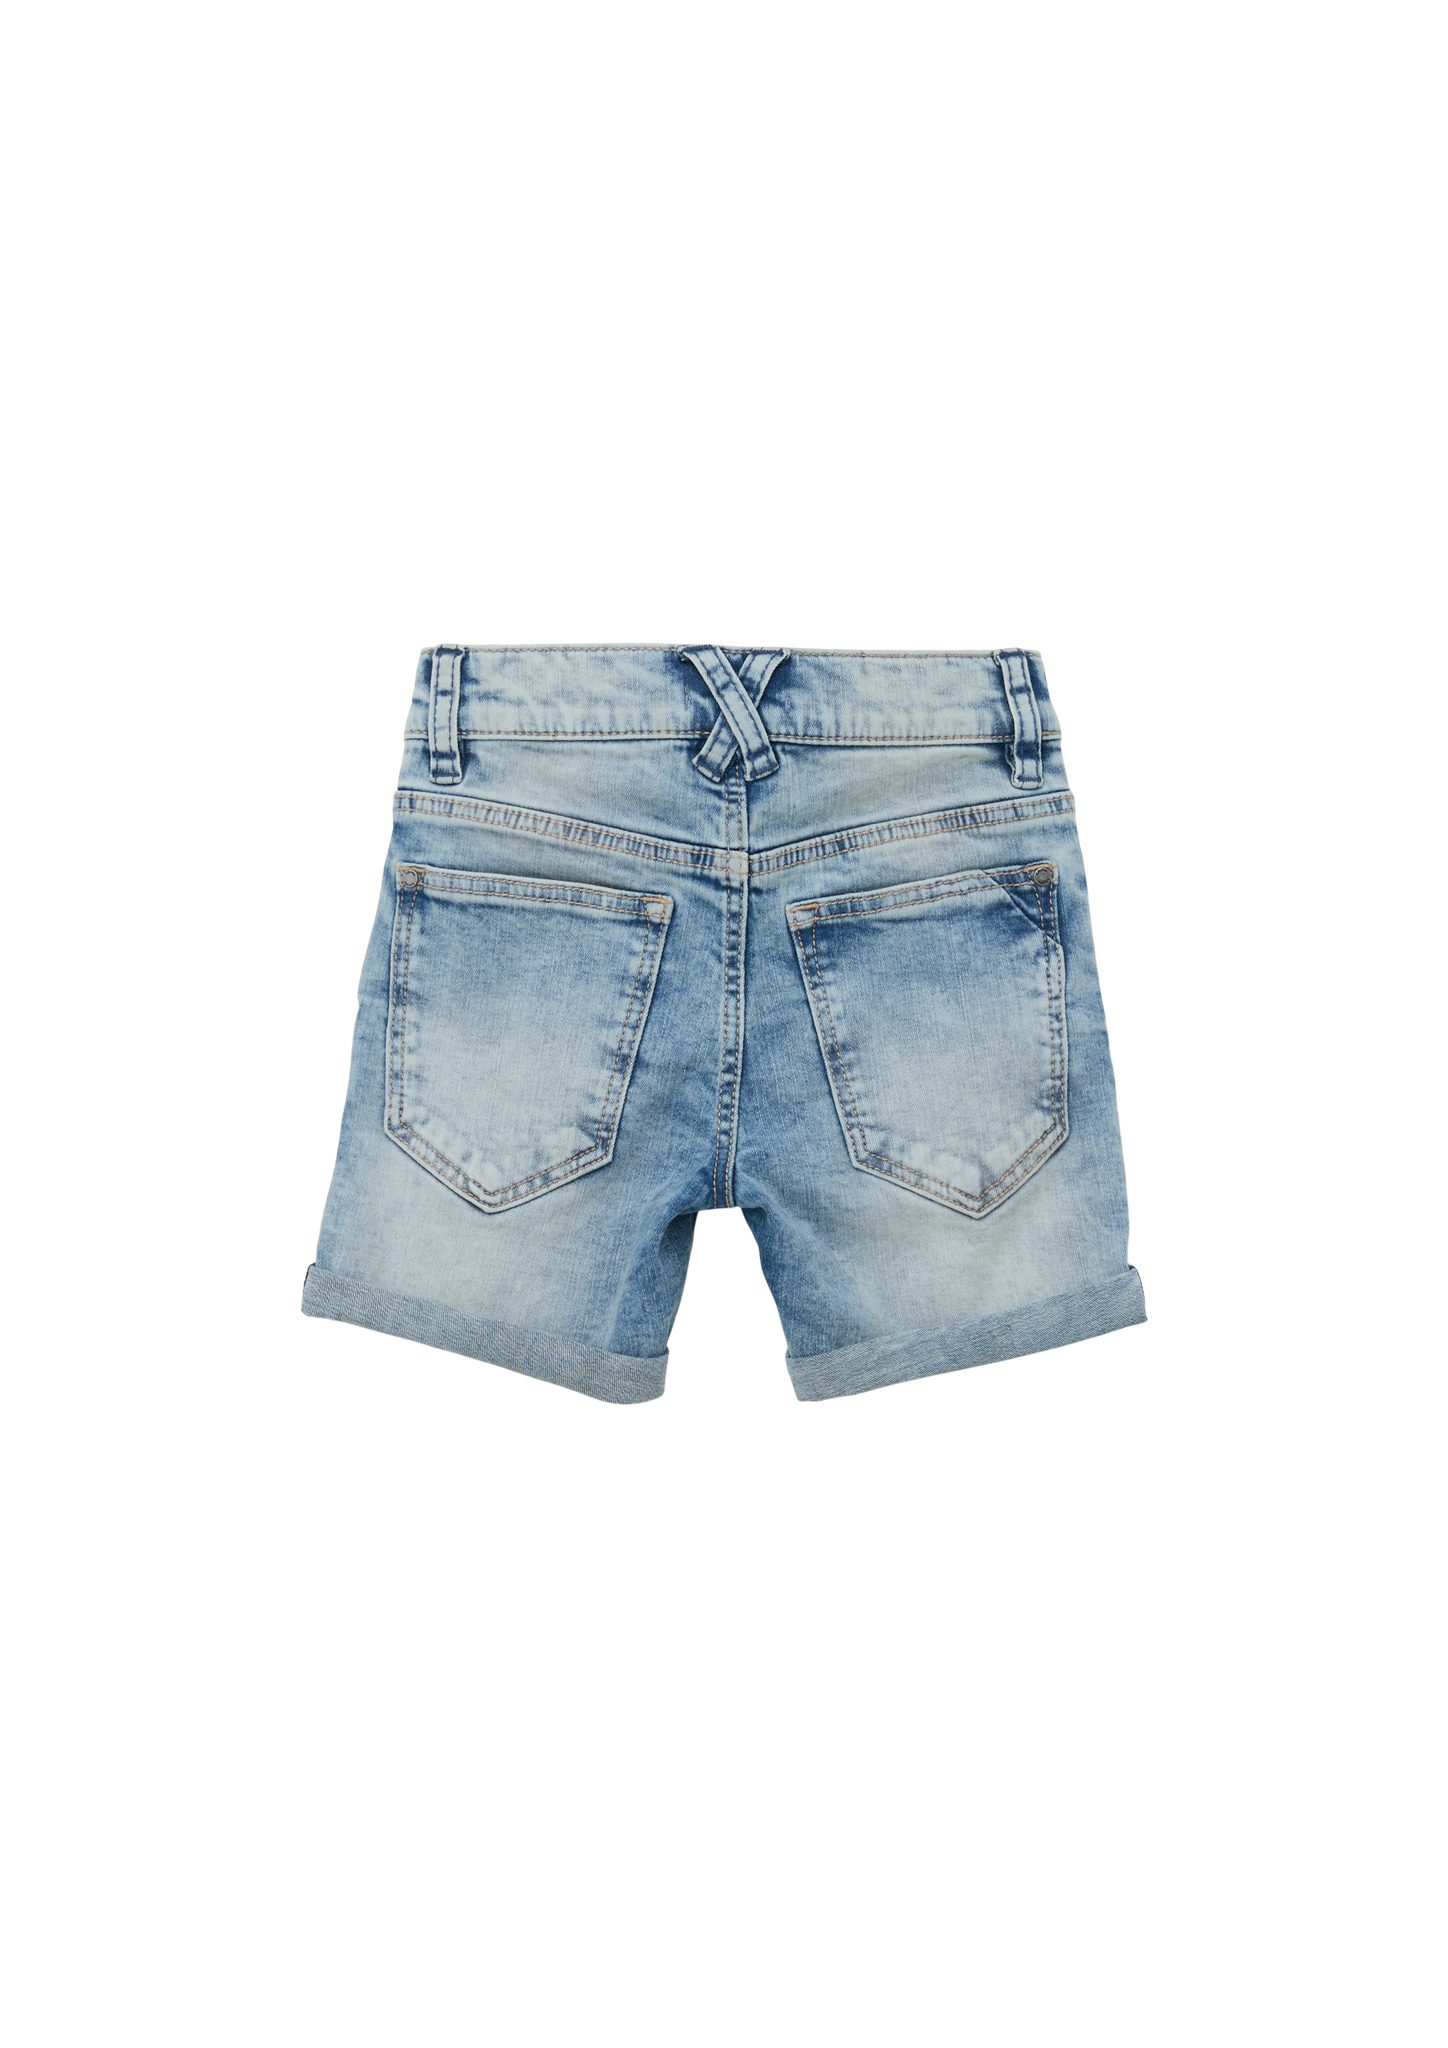 / Jeans-Bermuda Rise Leg / s.Oliver Slim / Brad Jeansshorts Fit Waschung Mid Slim